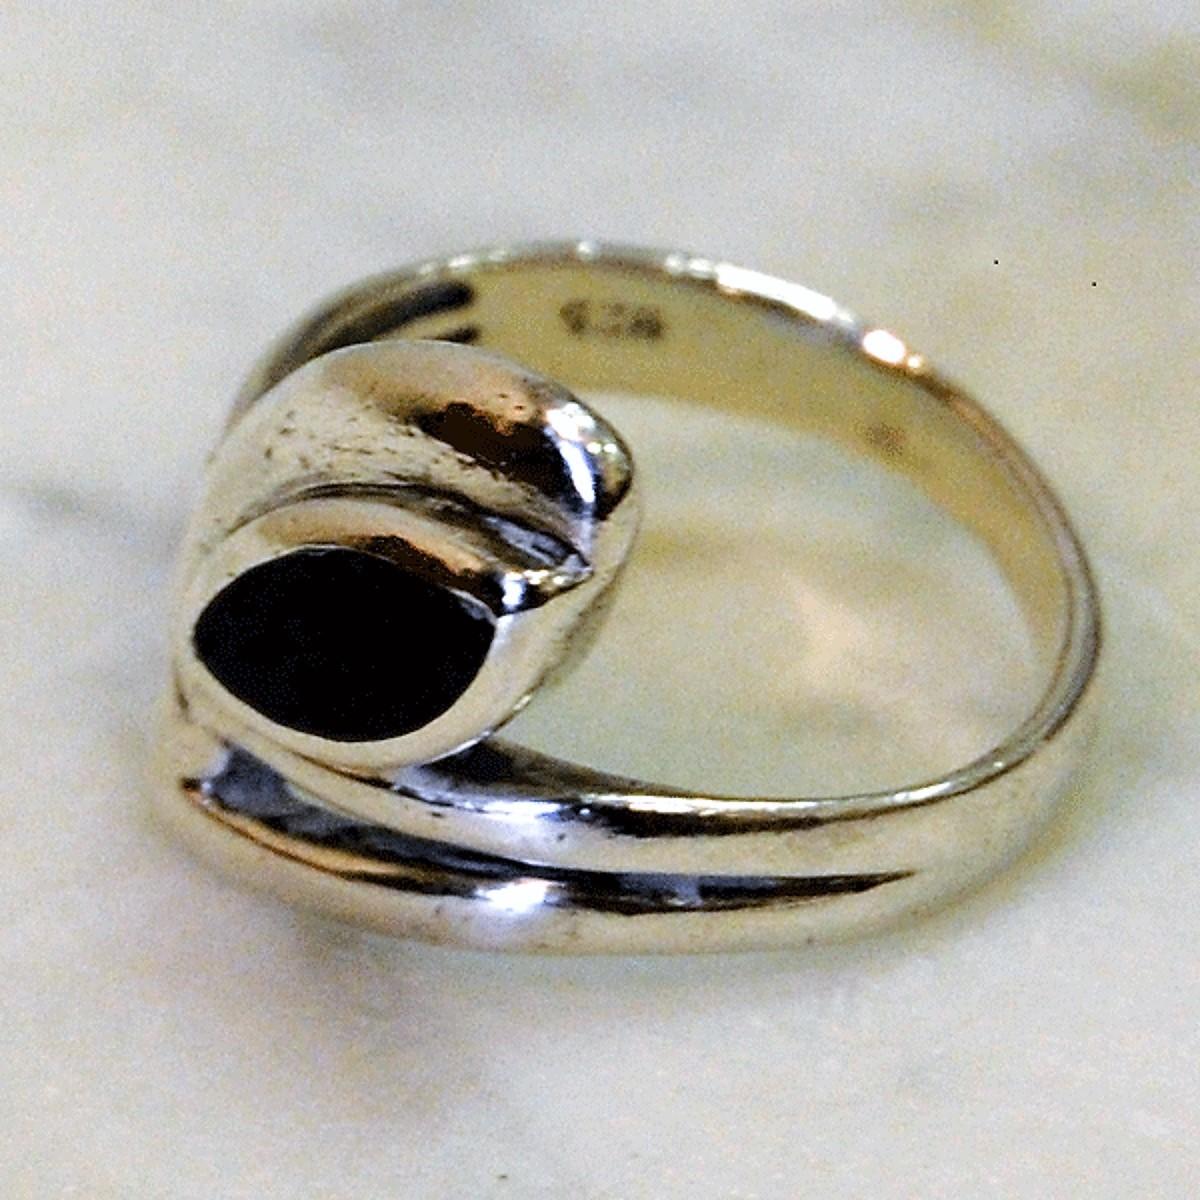 Scandinavian Eye Shaped Silver Ring with Brown Oval Stone 1950s-1960s, Scandinavia